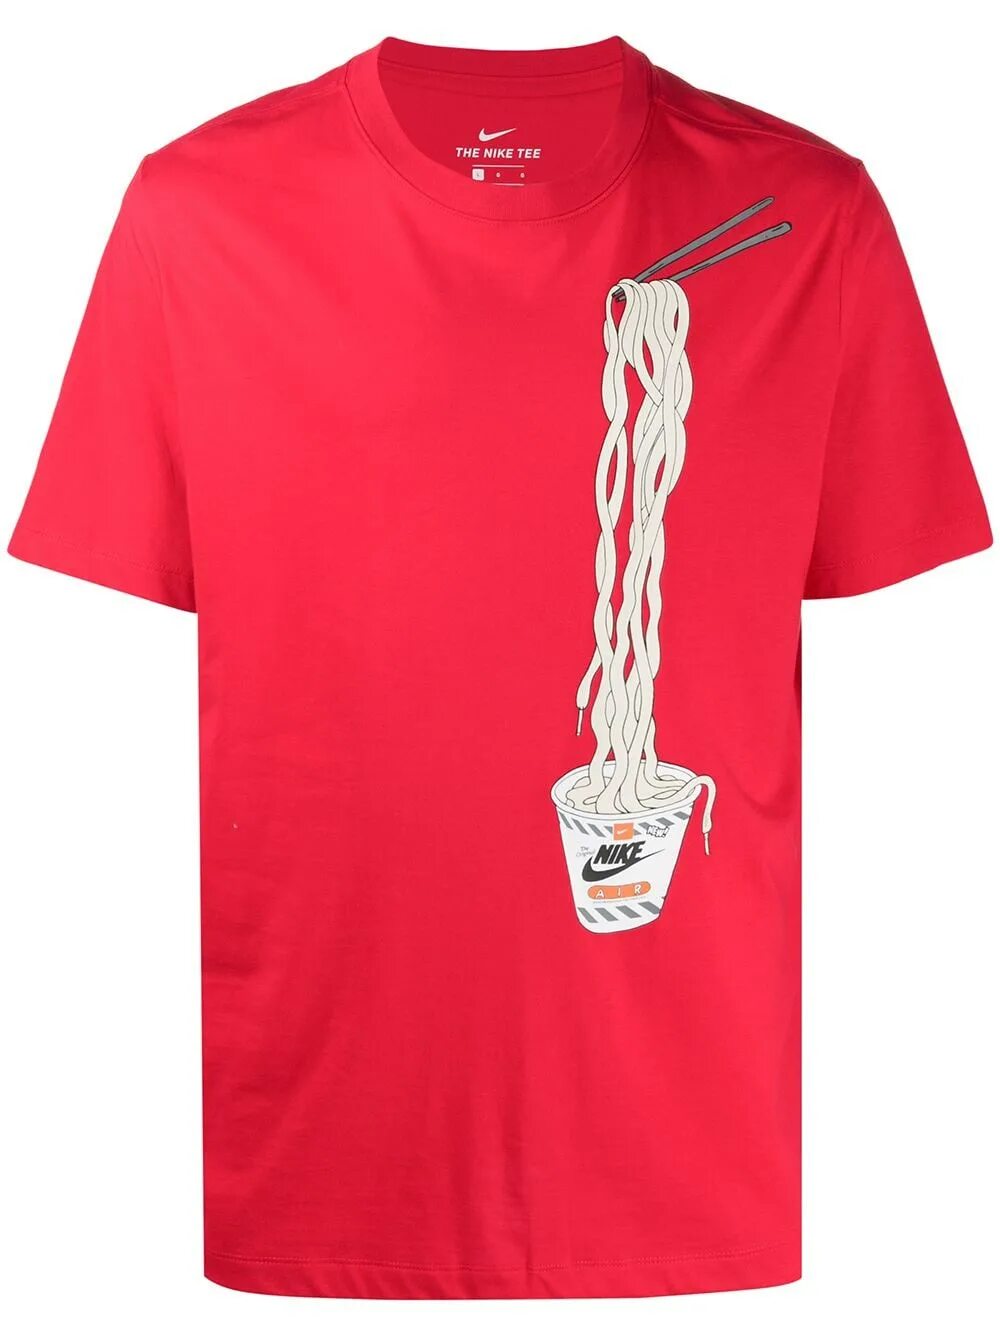 Рубашка лапша. Футболка найк с лапшой. Nike футболка с лапшой. Лапша футболка красный. Рыжая рубашка найк.